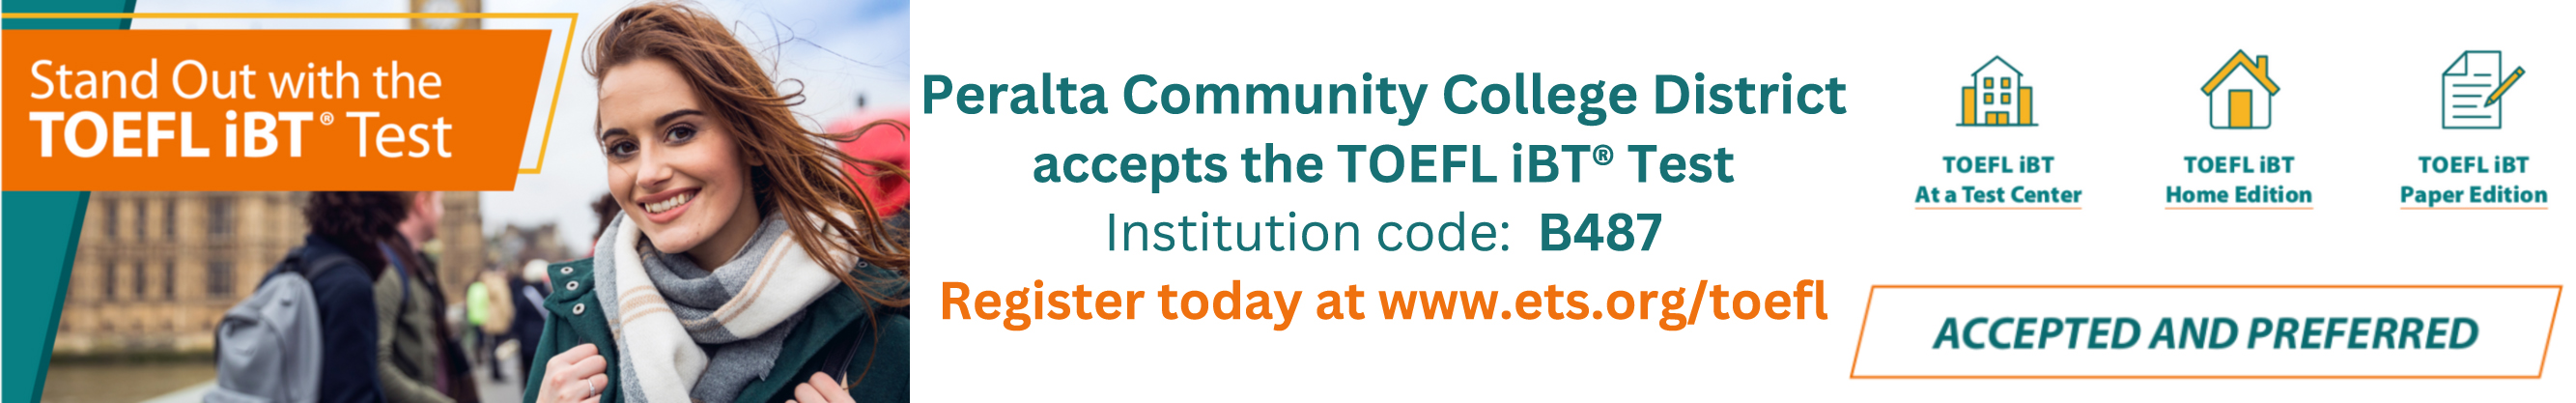 Peralta Community College District TOEFL Banner